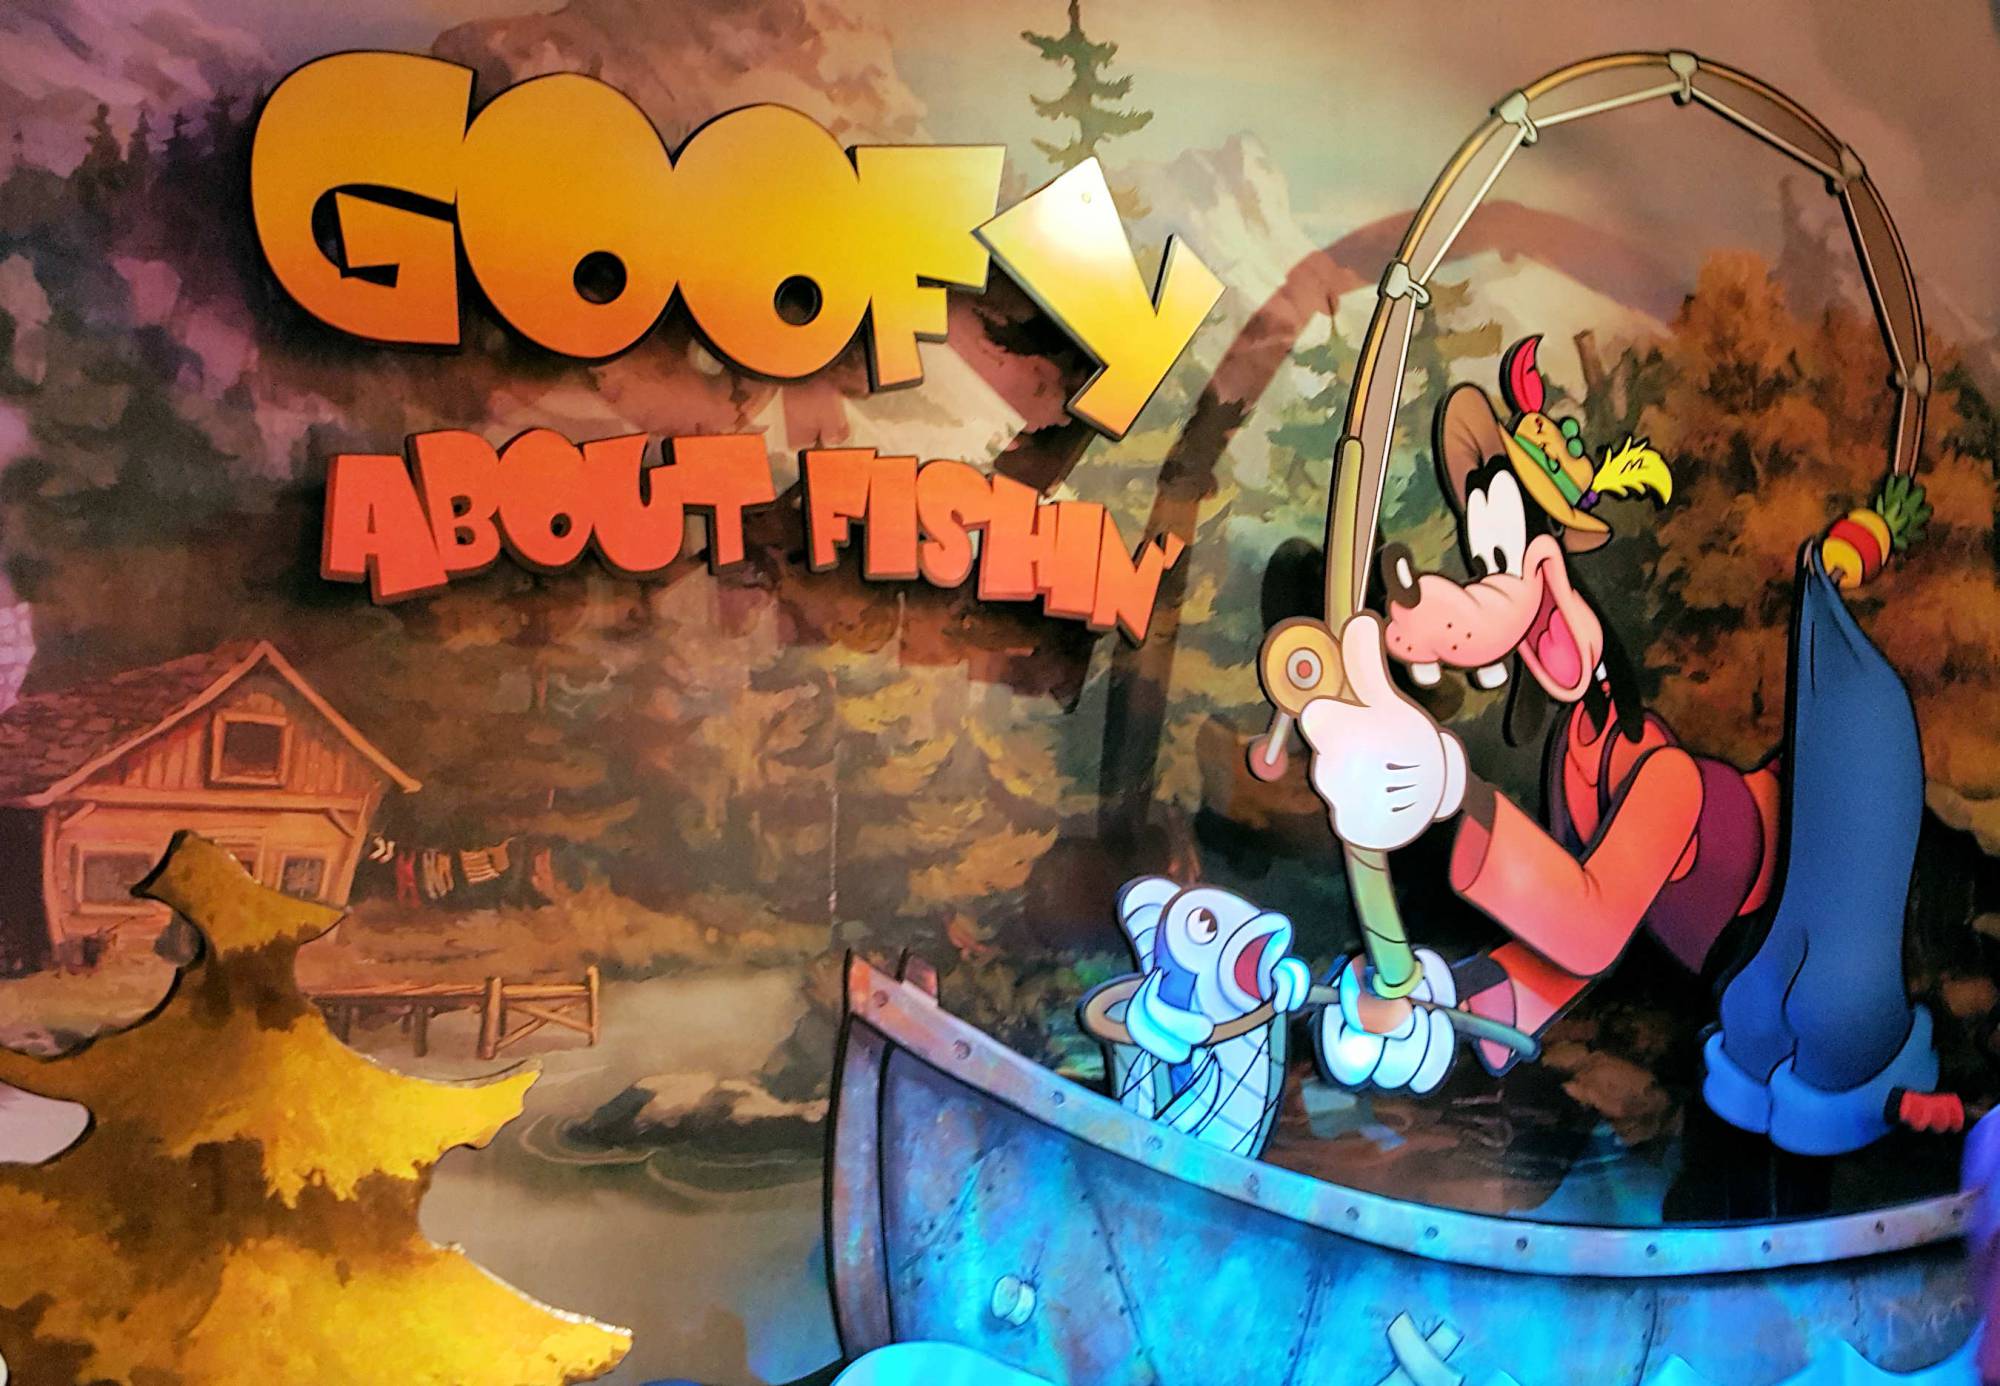 California Adventure Paradise Pier Boardwalk Games Goofy About Fishin